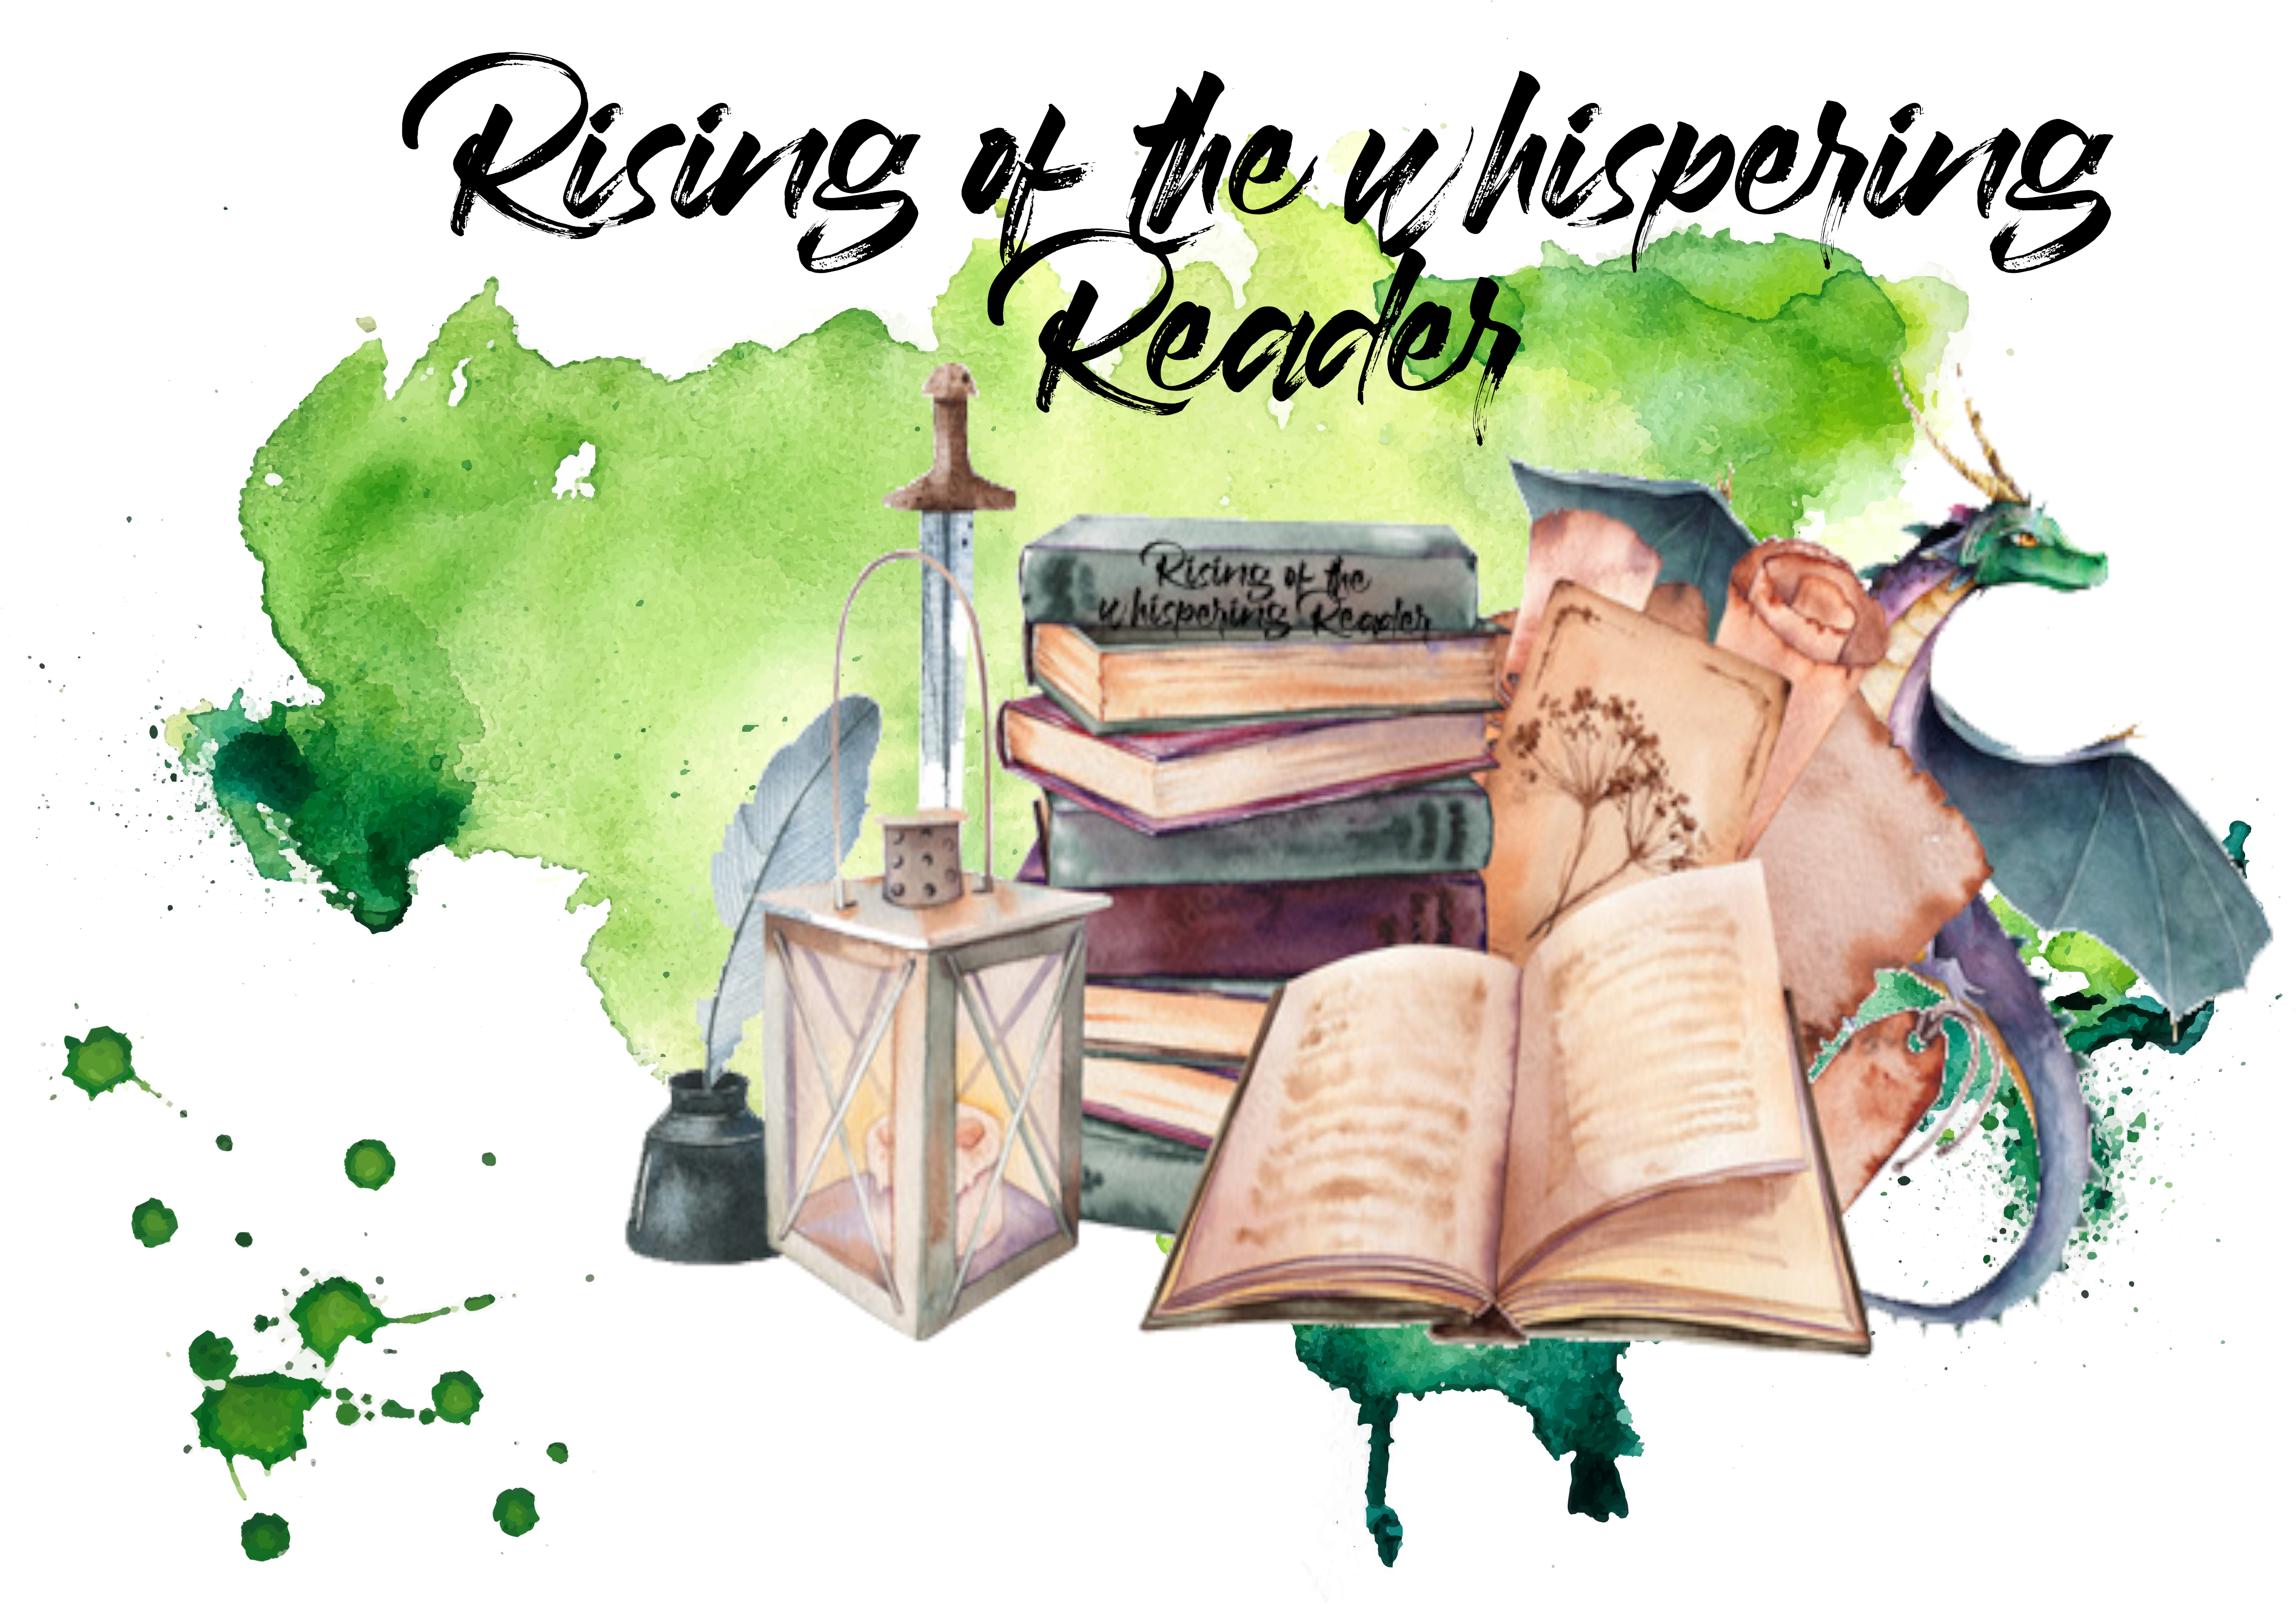 Rising of the whispering Reader – Aufgaben im August